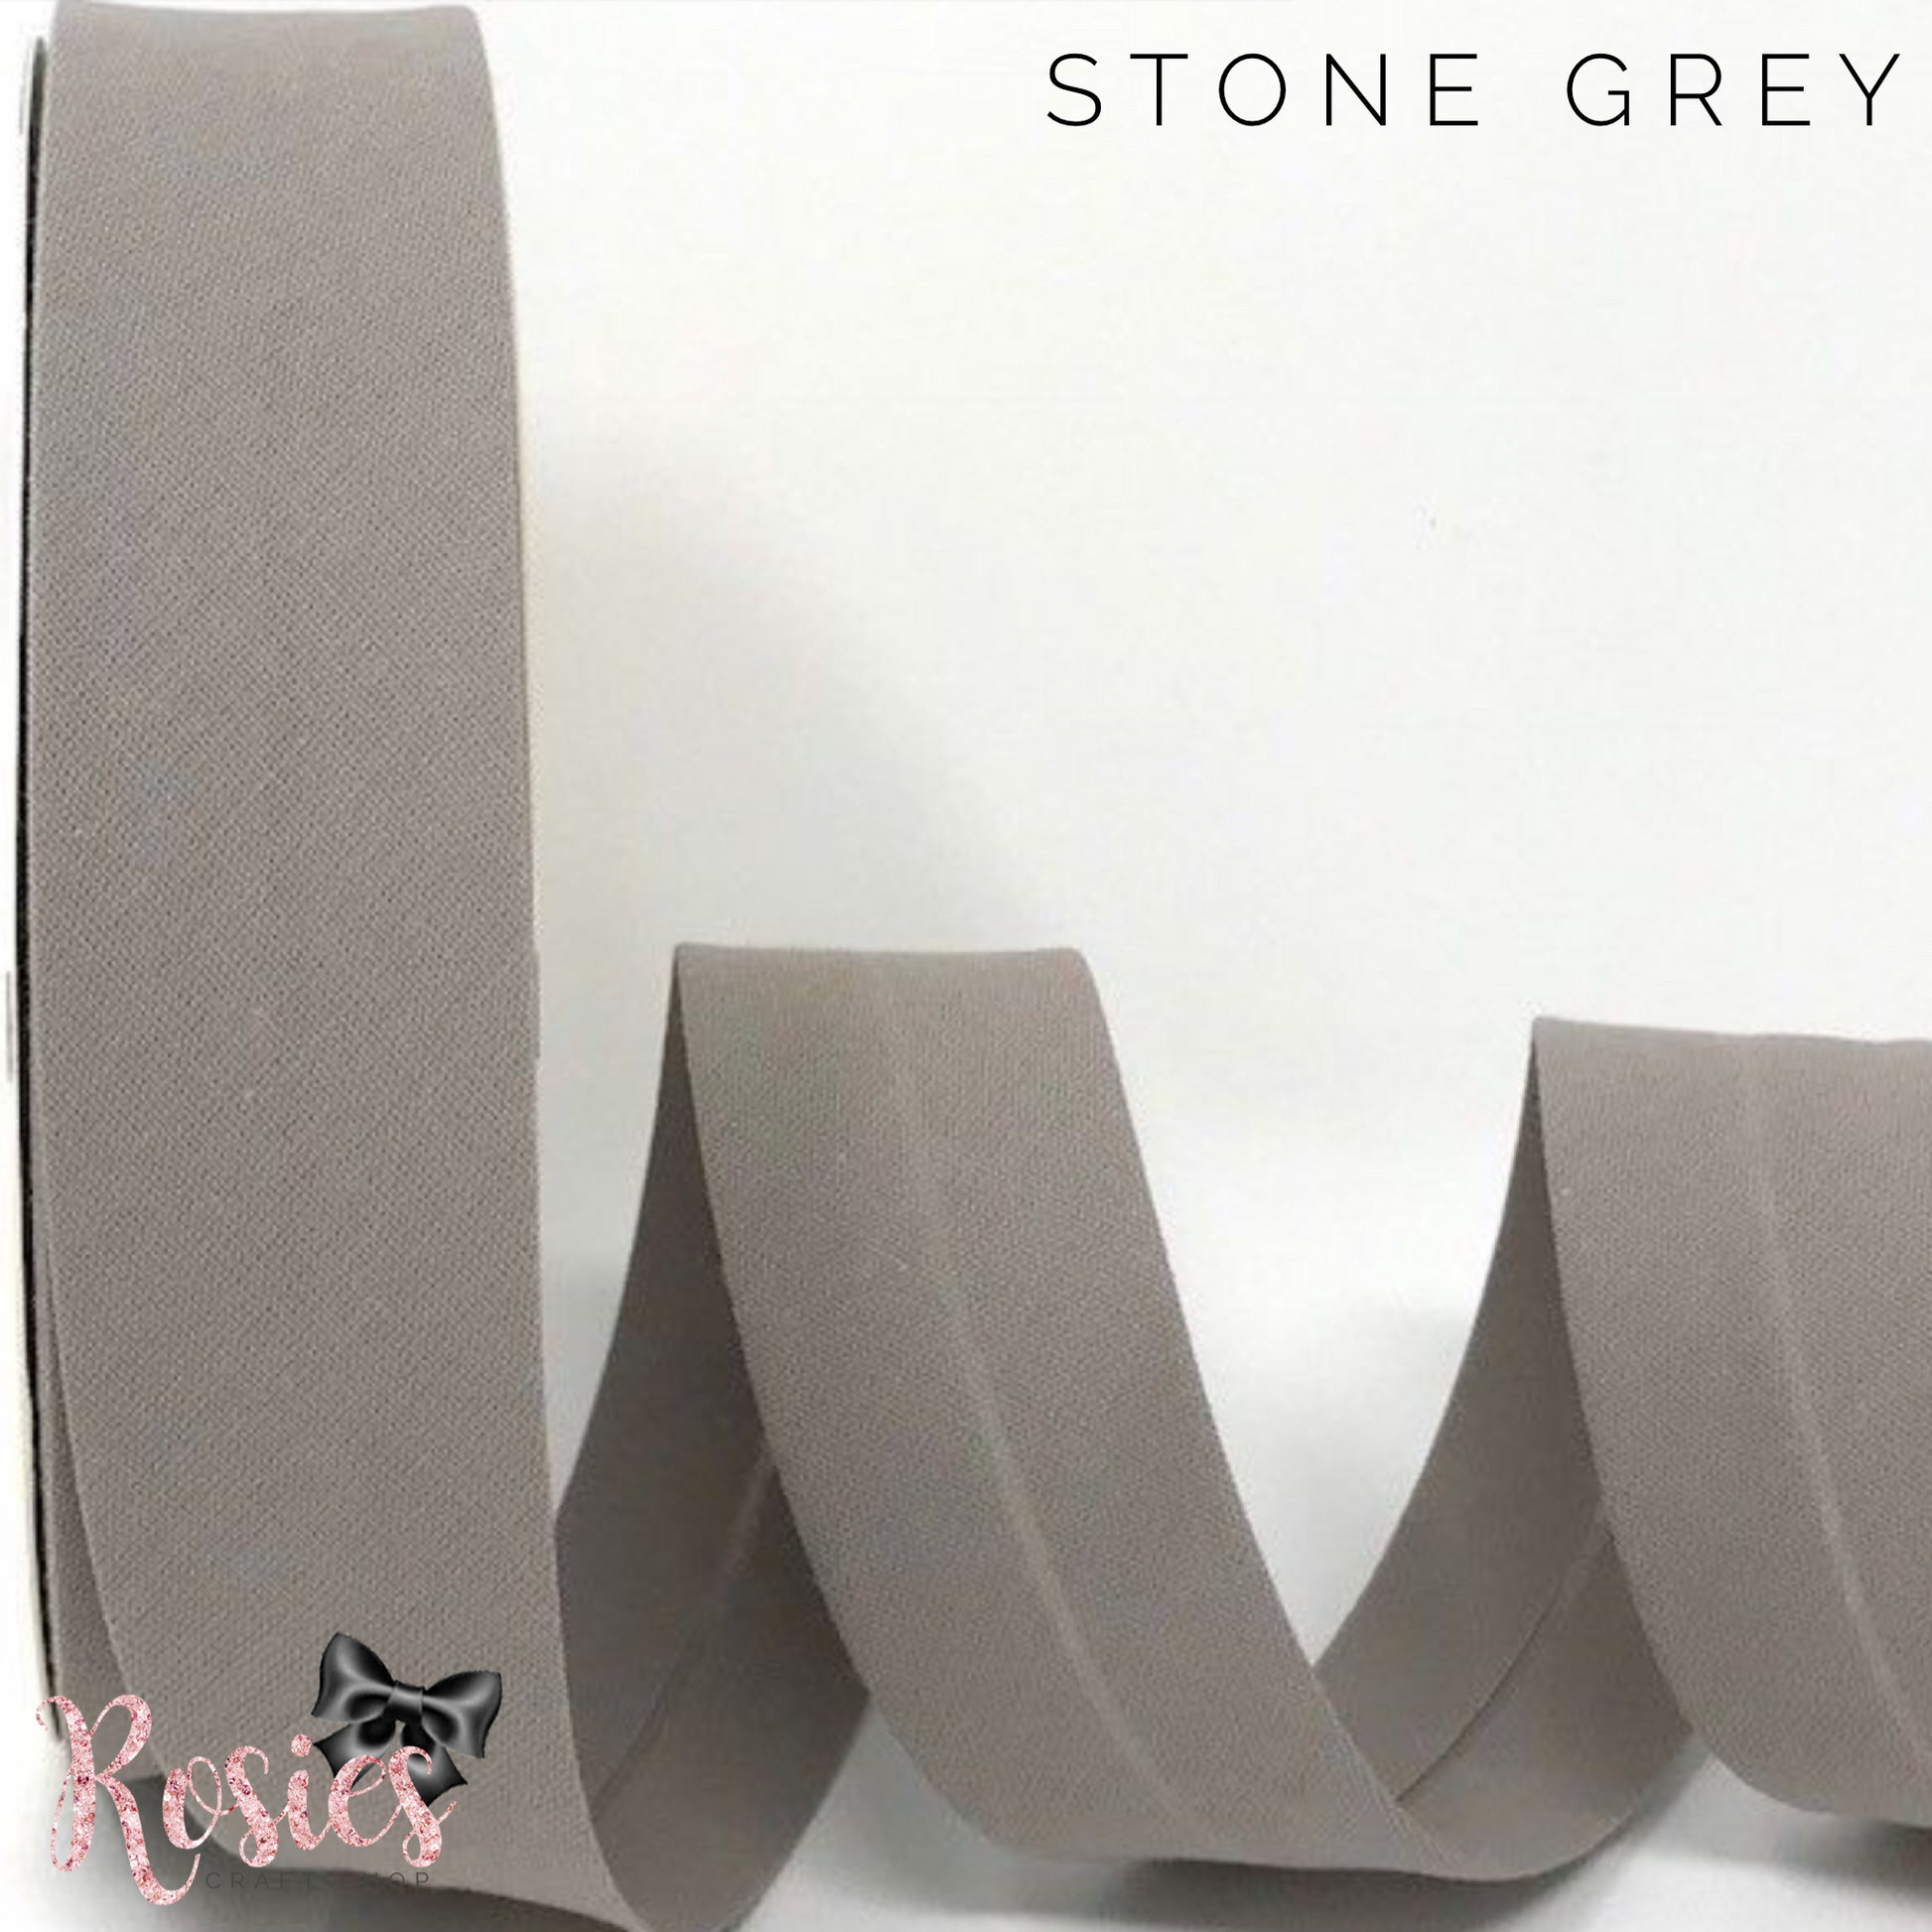 30mm Stone Grey Plain Polycotton Bias Binding - Rosie's Craft Shop Ltd